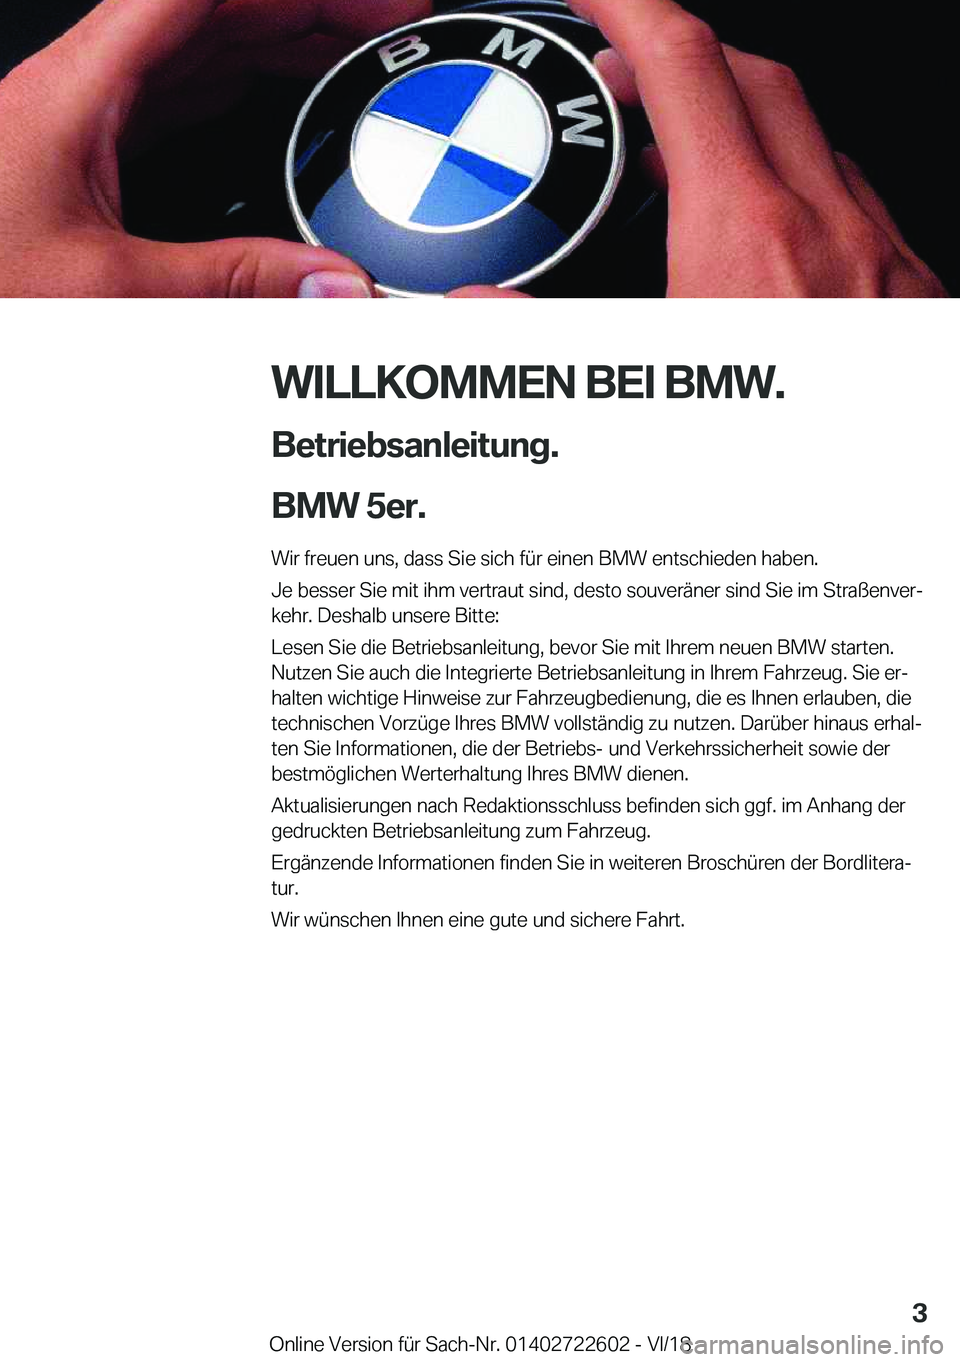 BMW 5 SERIES 2019  Betriebsanleitungen (in German) �W�I�L�L�K�O�M�M�E�N��B�E�I��B�M�W�.�B�e�t�r�i�e�b�s�a�n�l�e�i�t�u�n�g�.
�B�M�W��5�e�r�.
�W�i�r��f�r�e�u�e�n��u�n�s�,��d�a�s�s��S�i�e��s�i�c�h��f�